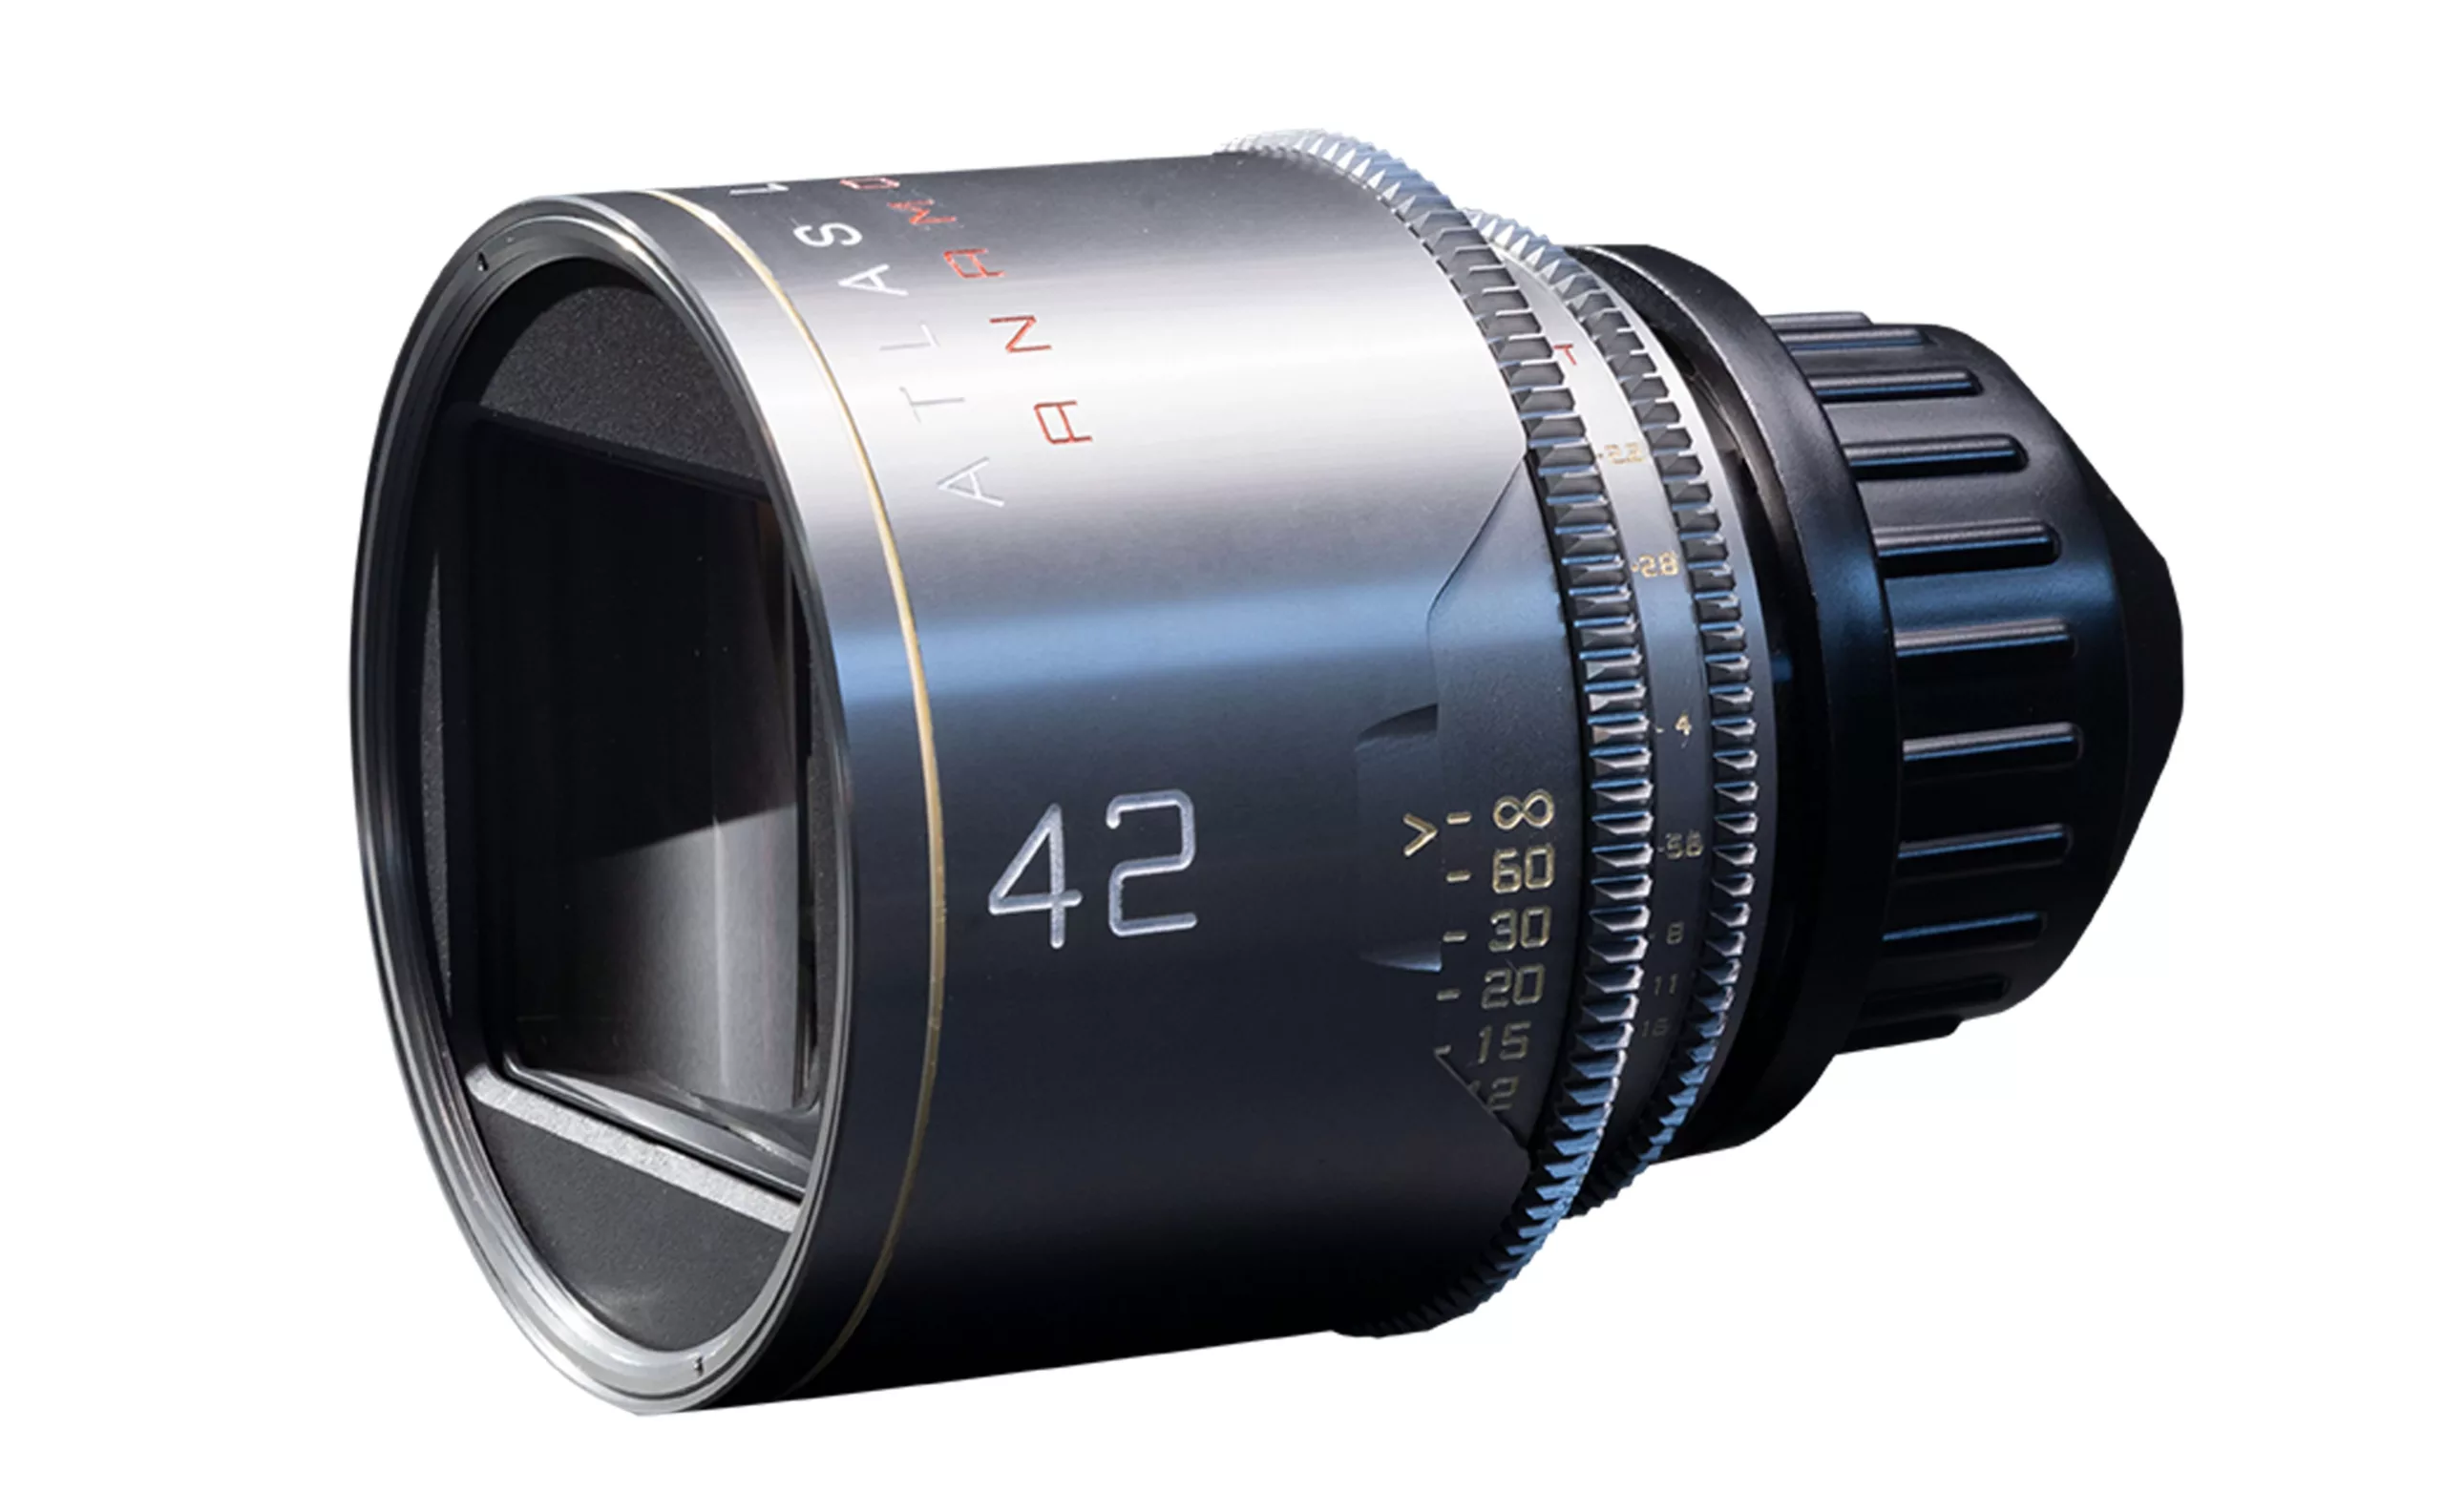 Cooke Anamorphic SF 2x lens 32mm